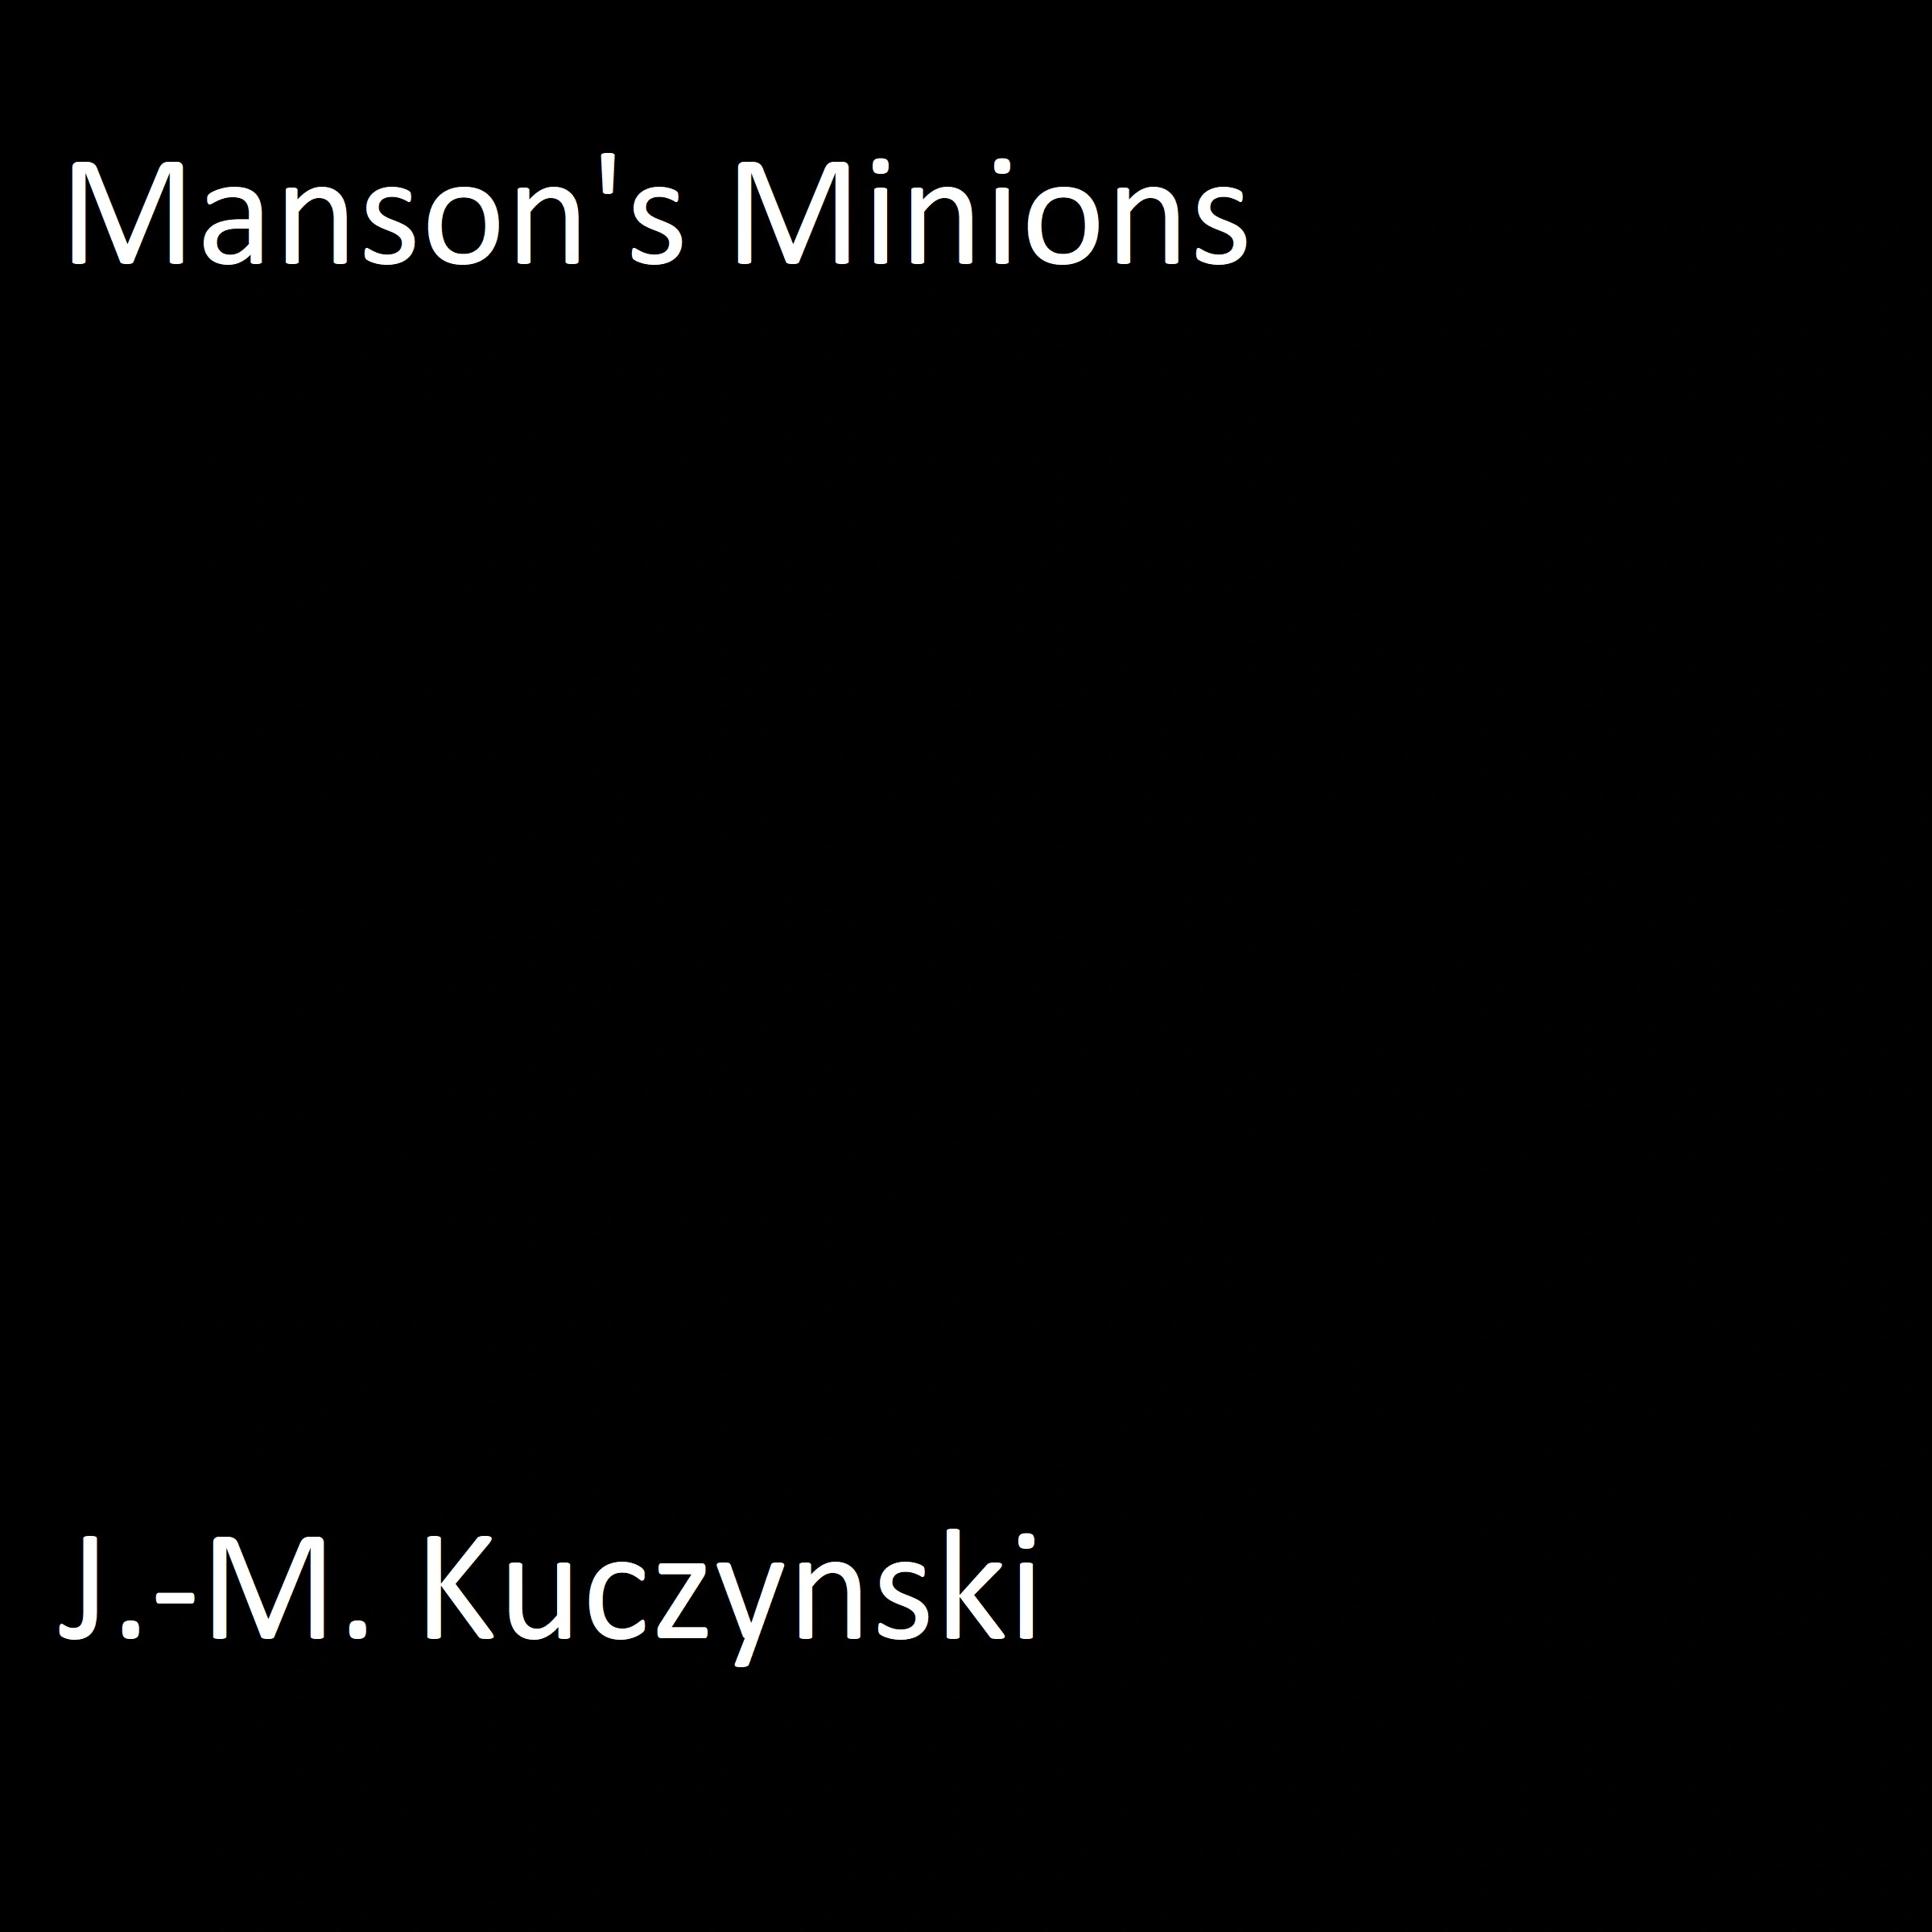 Manson’s Minions Audiobook by J.-M. Kuczynski